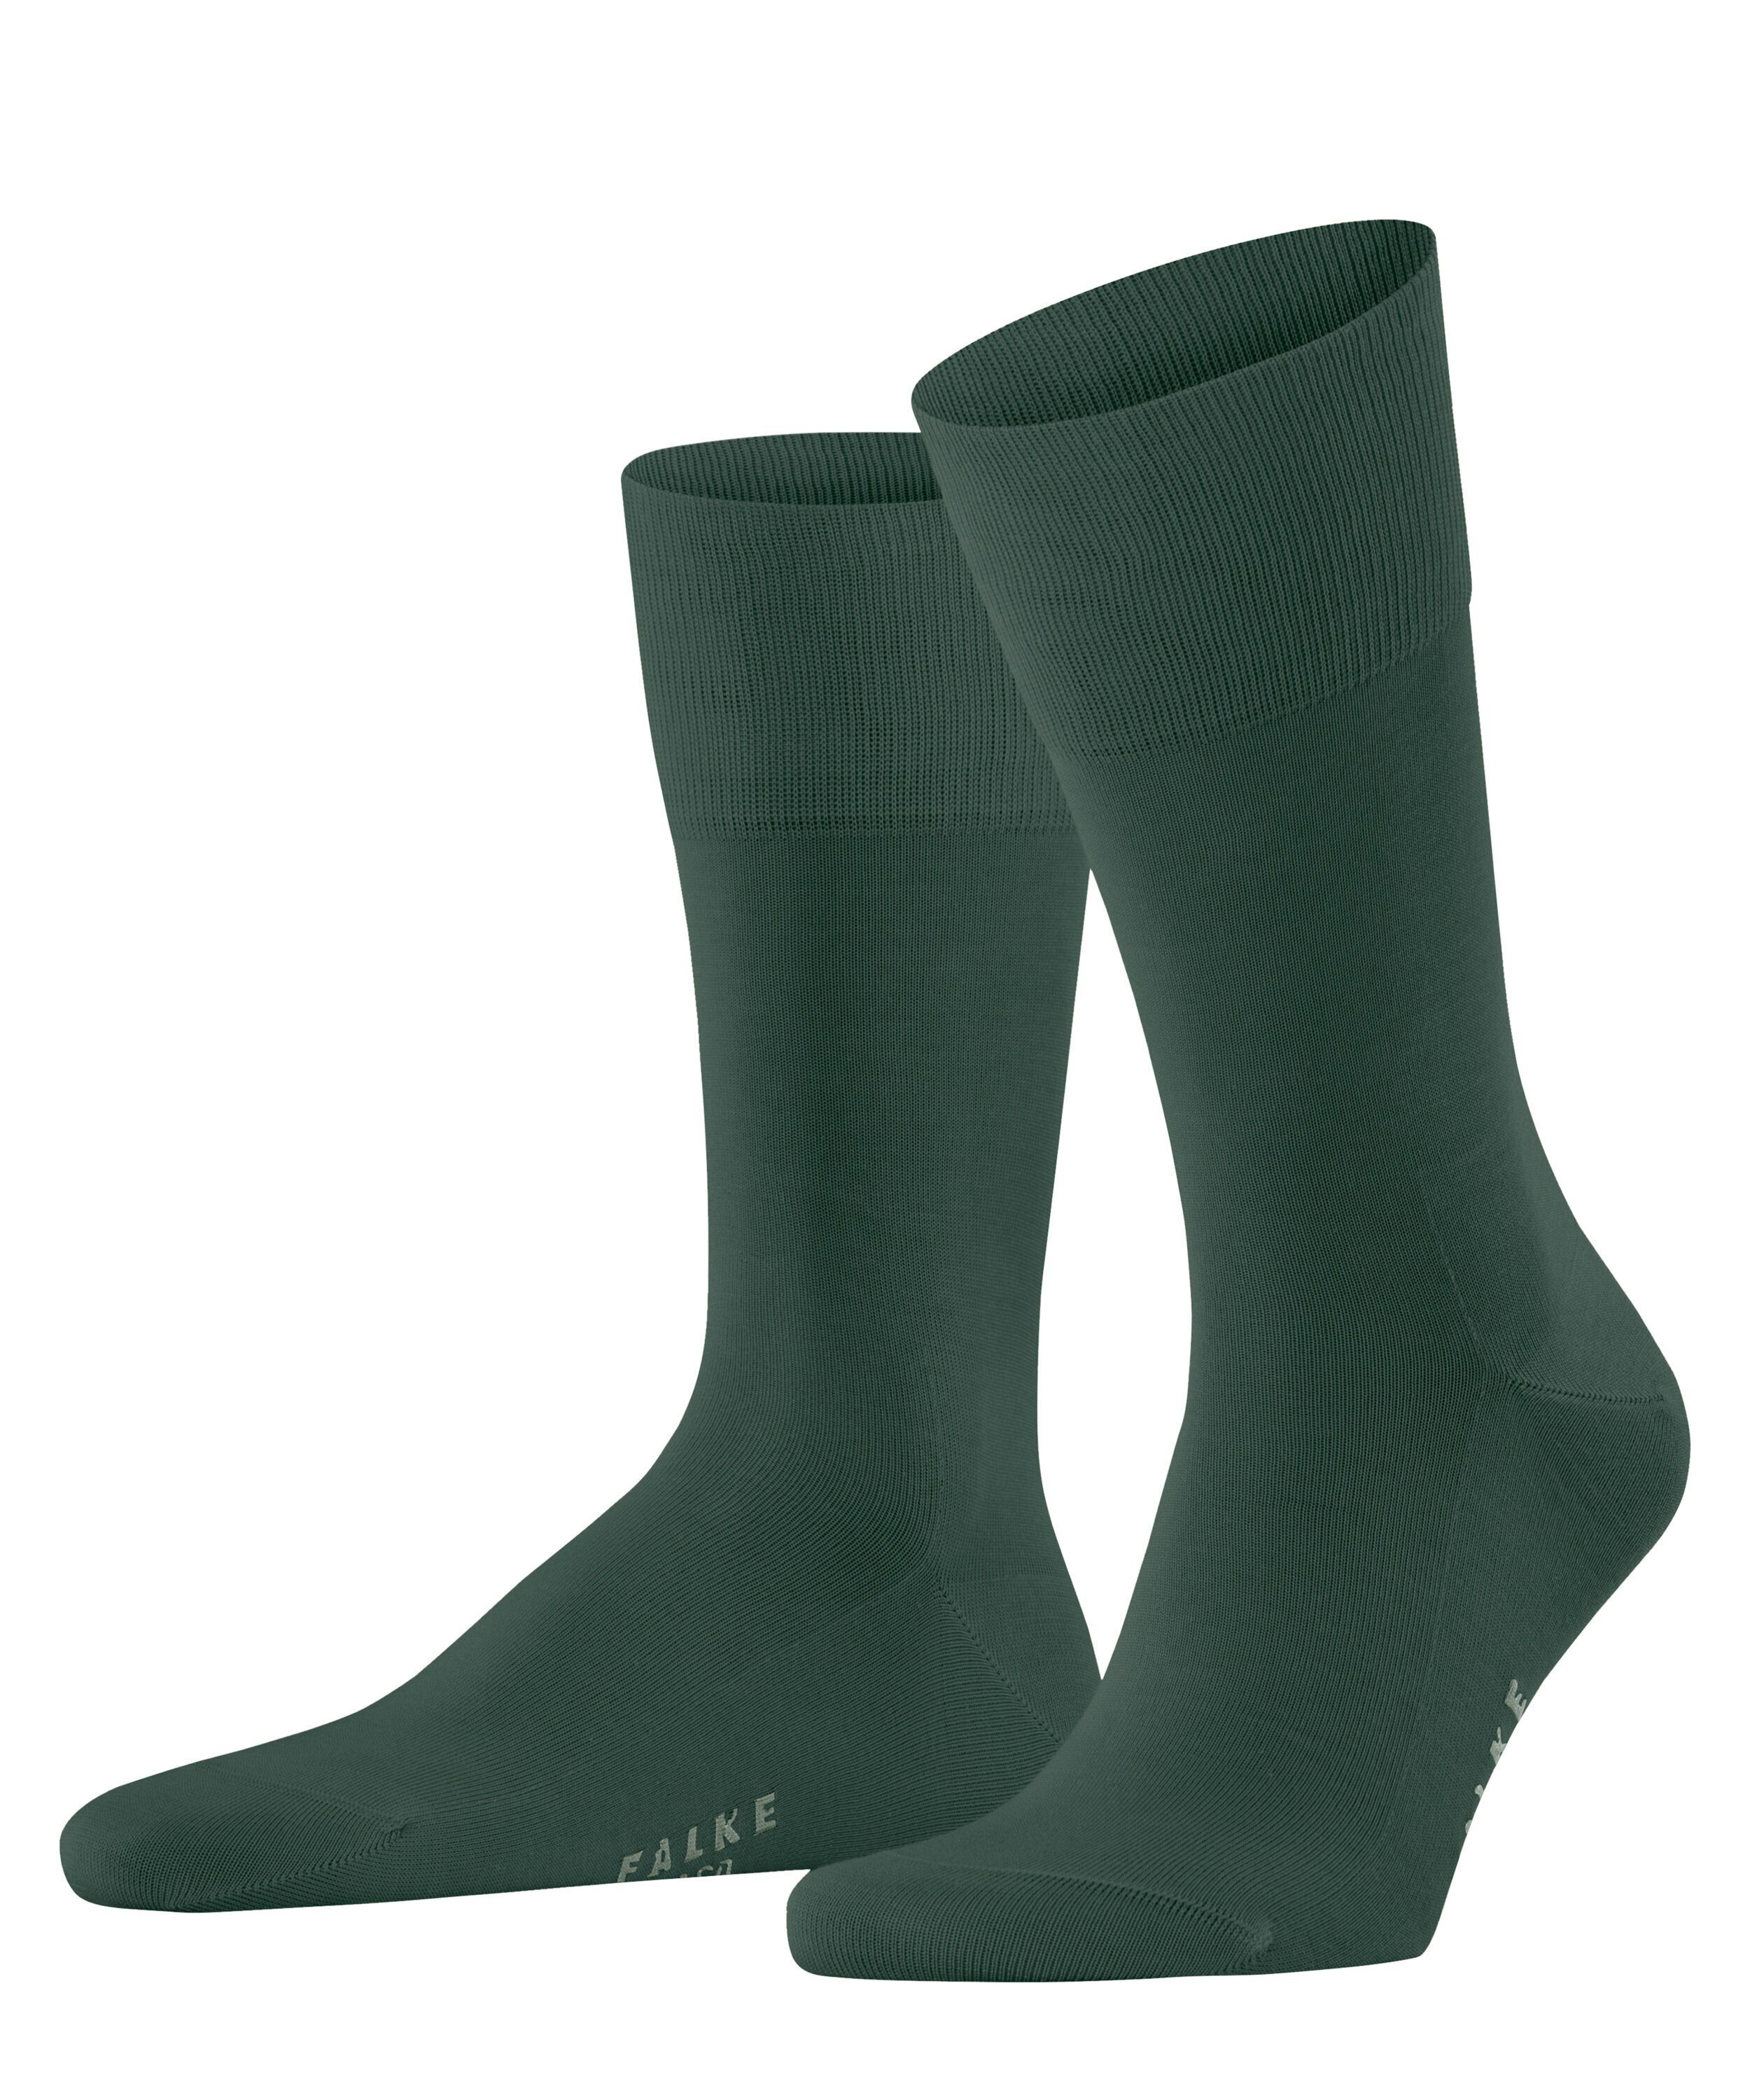 Tiago FALKE (7441) Socken (1-Paar) hunter green